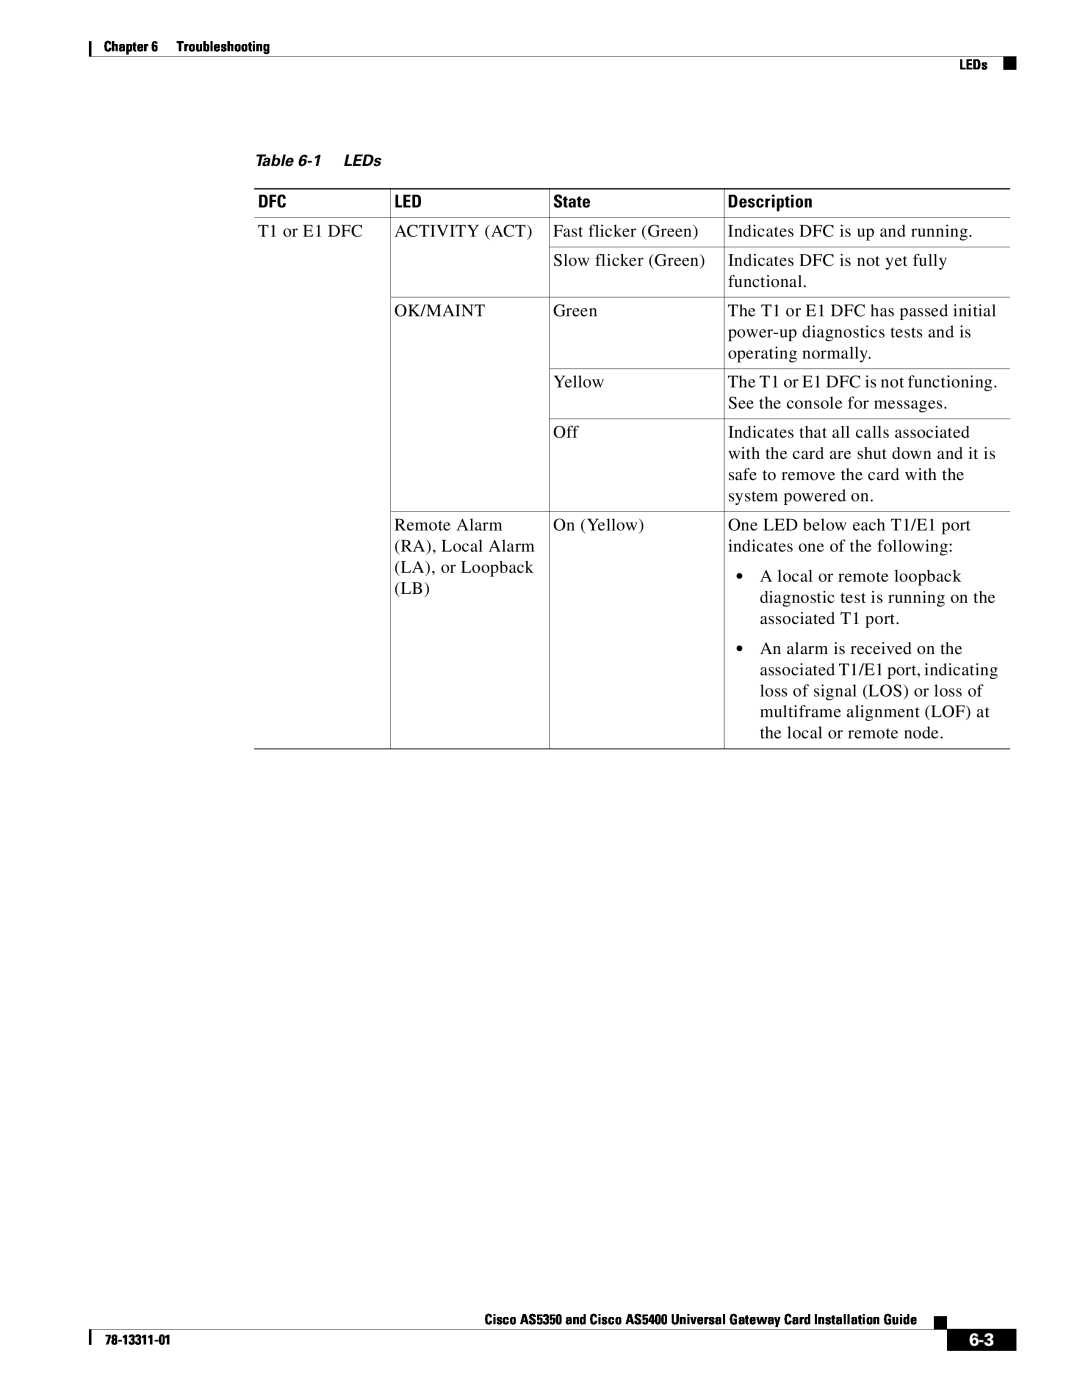 Cisco Systems AS5400 manual State, Description, T1 or E1 DFC 